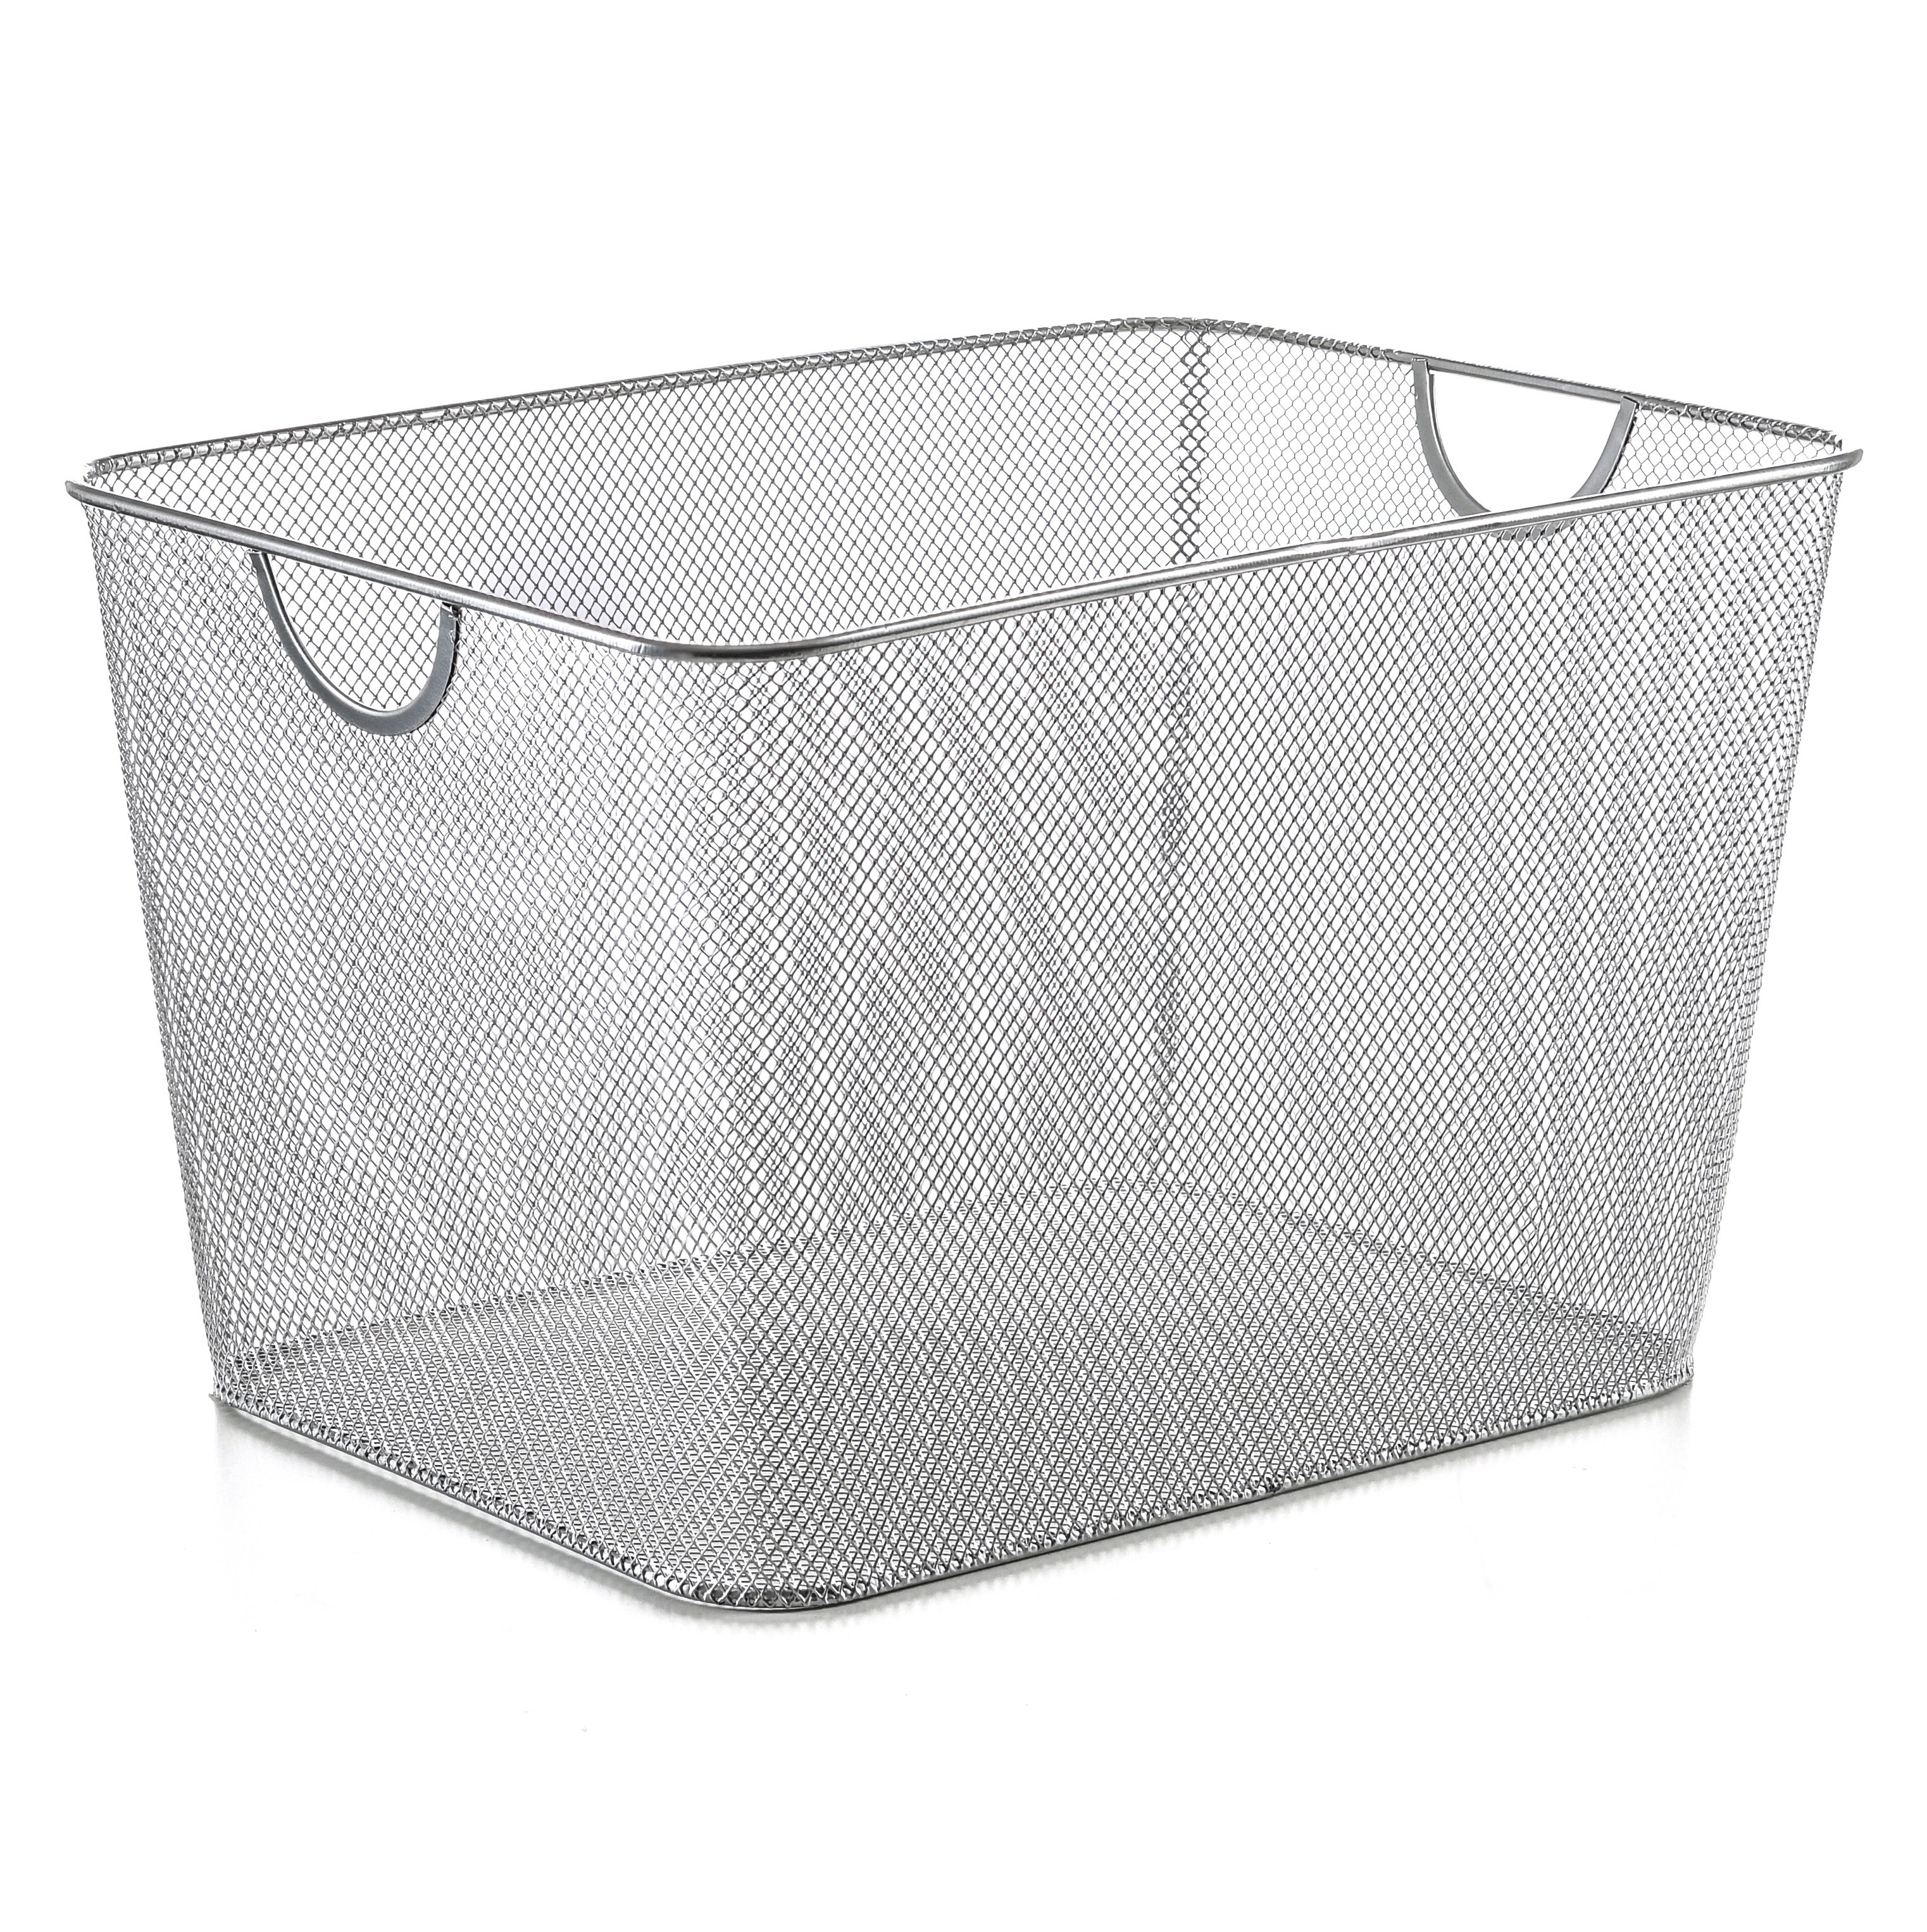 Ybm Home Mesh Open Bin Storage Basket Reviews Wayfair pertaining to dimensions 3045 X 3053